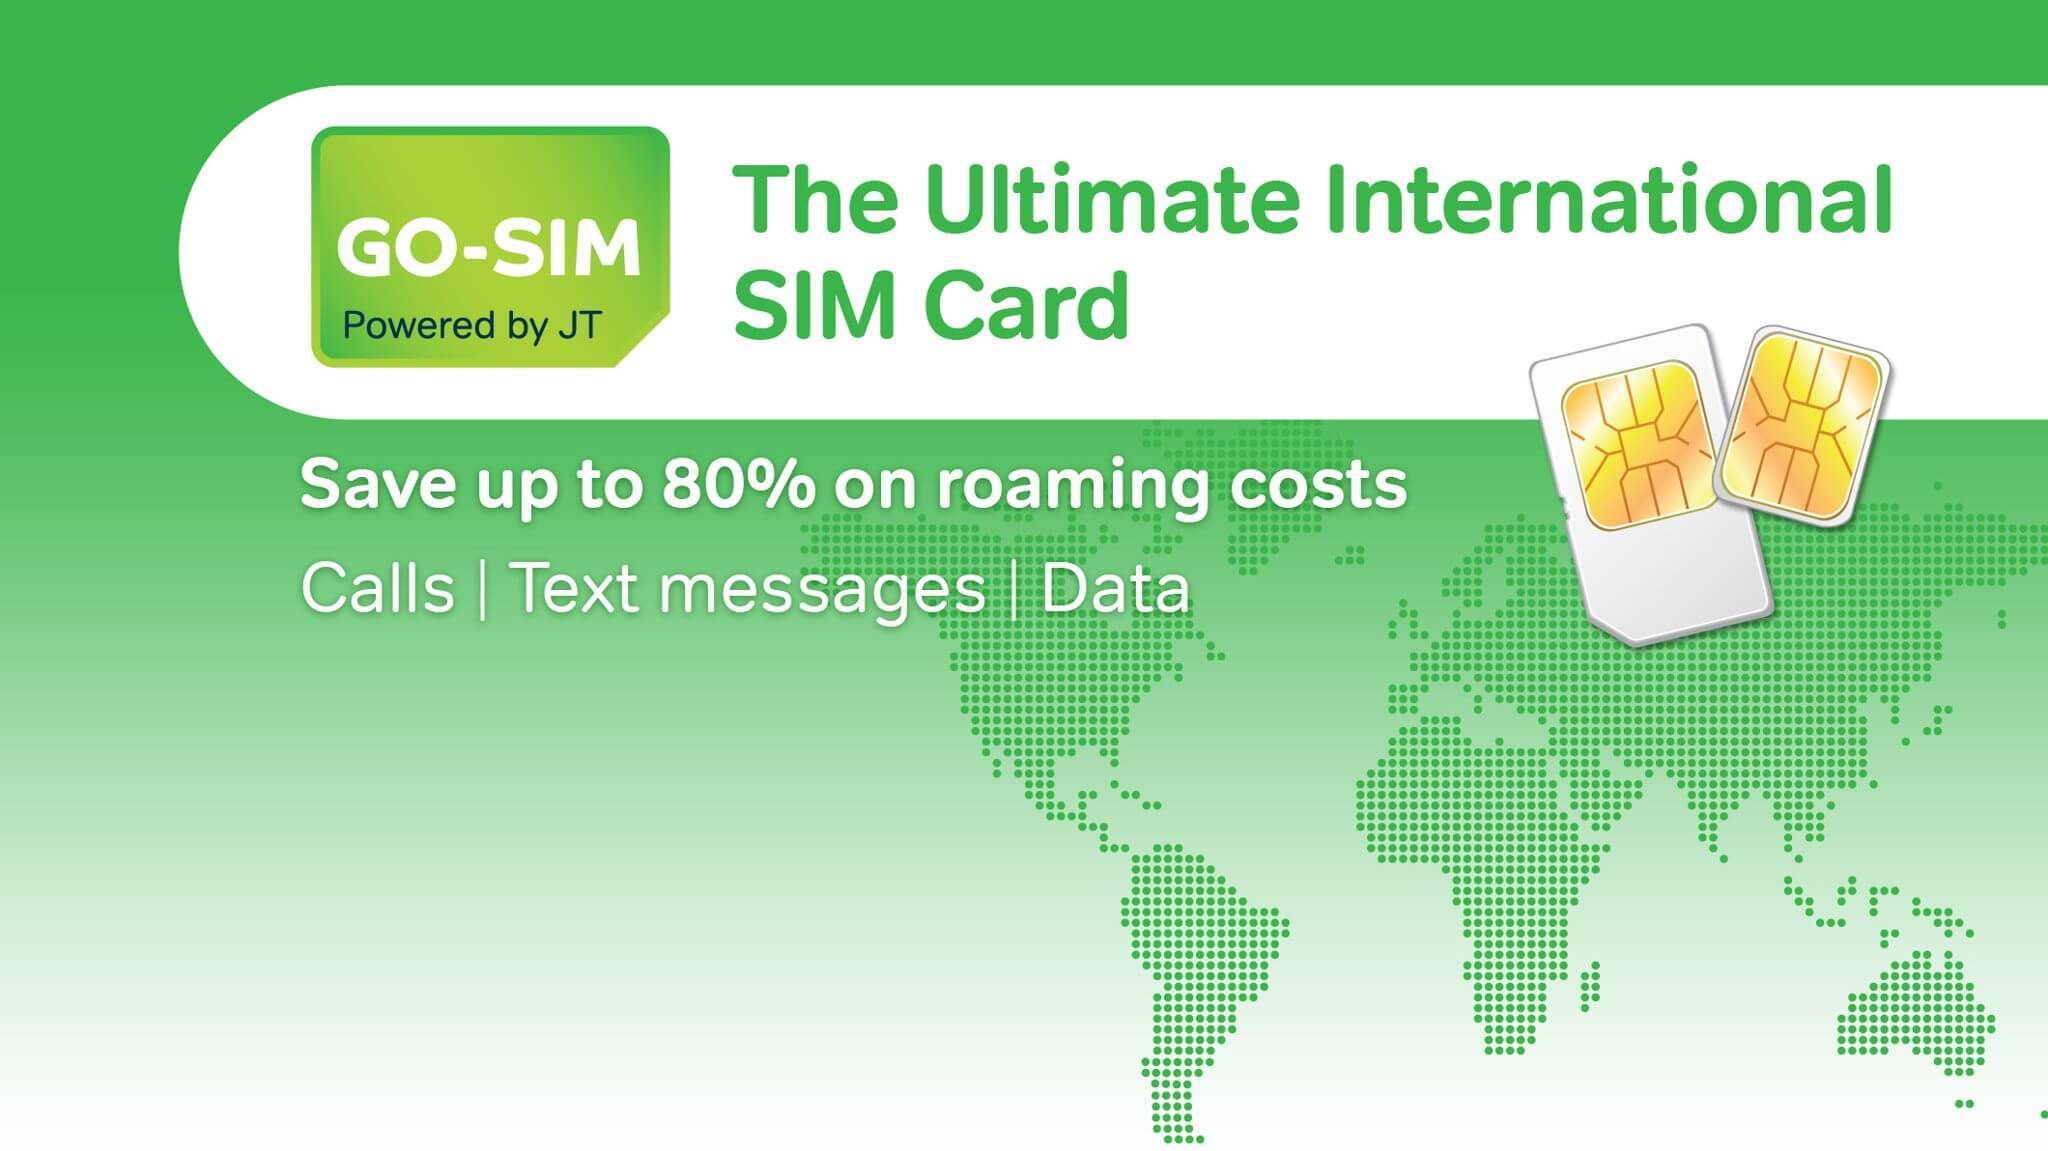 Internationale SIM-Karte für Reisen nach ZYPERN and all over the world ChatSim multi-operator GSM/2G/3G/4G network coverage in 165 countries global roaming 